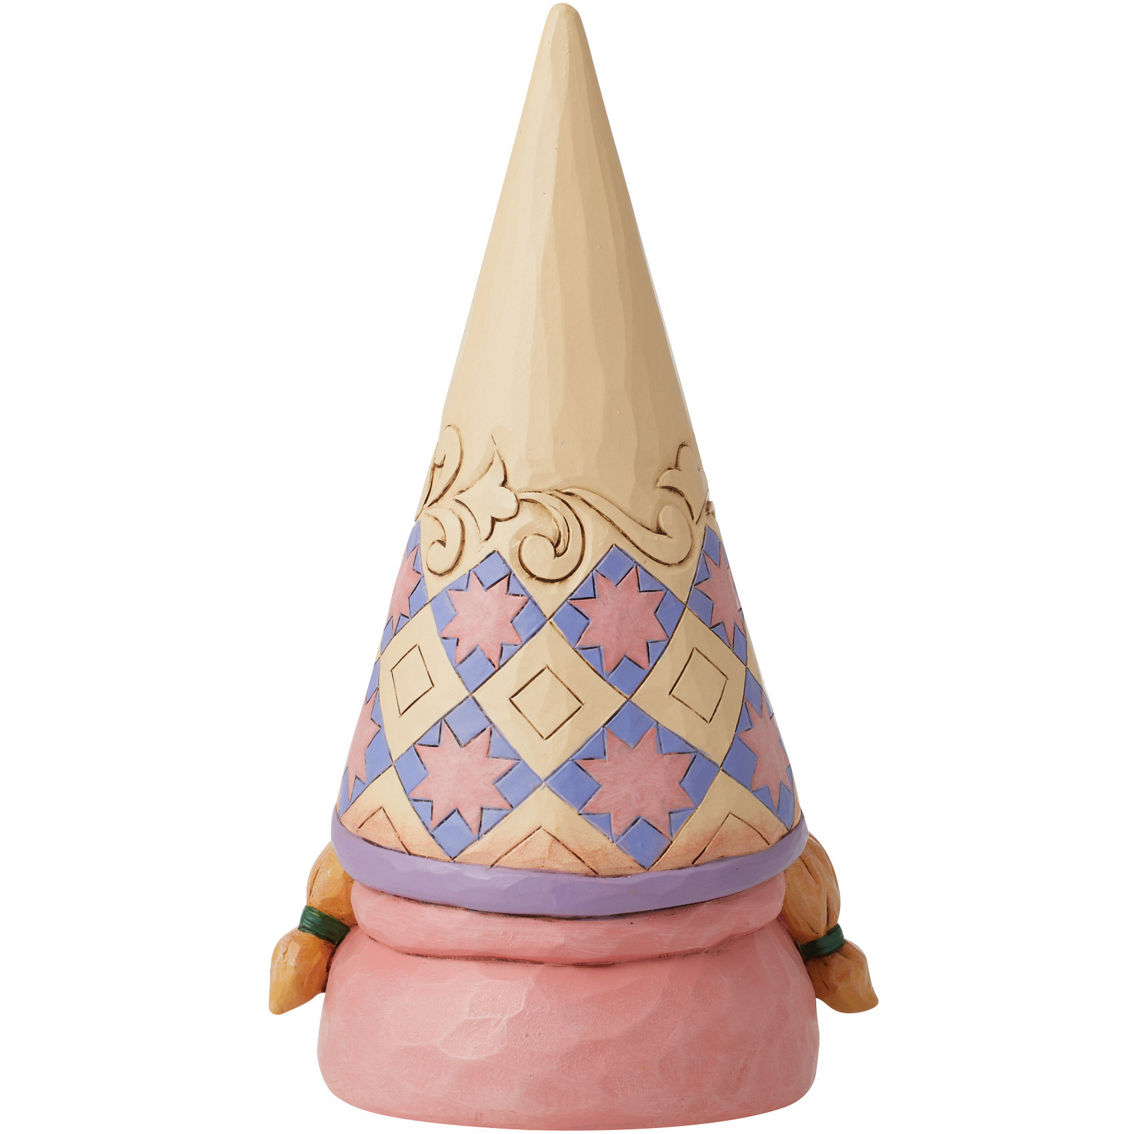 Jim Shore Heartwood Creek Sewing Gnome Figure - Image 2 of 2